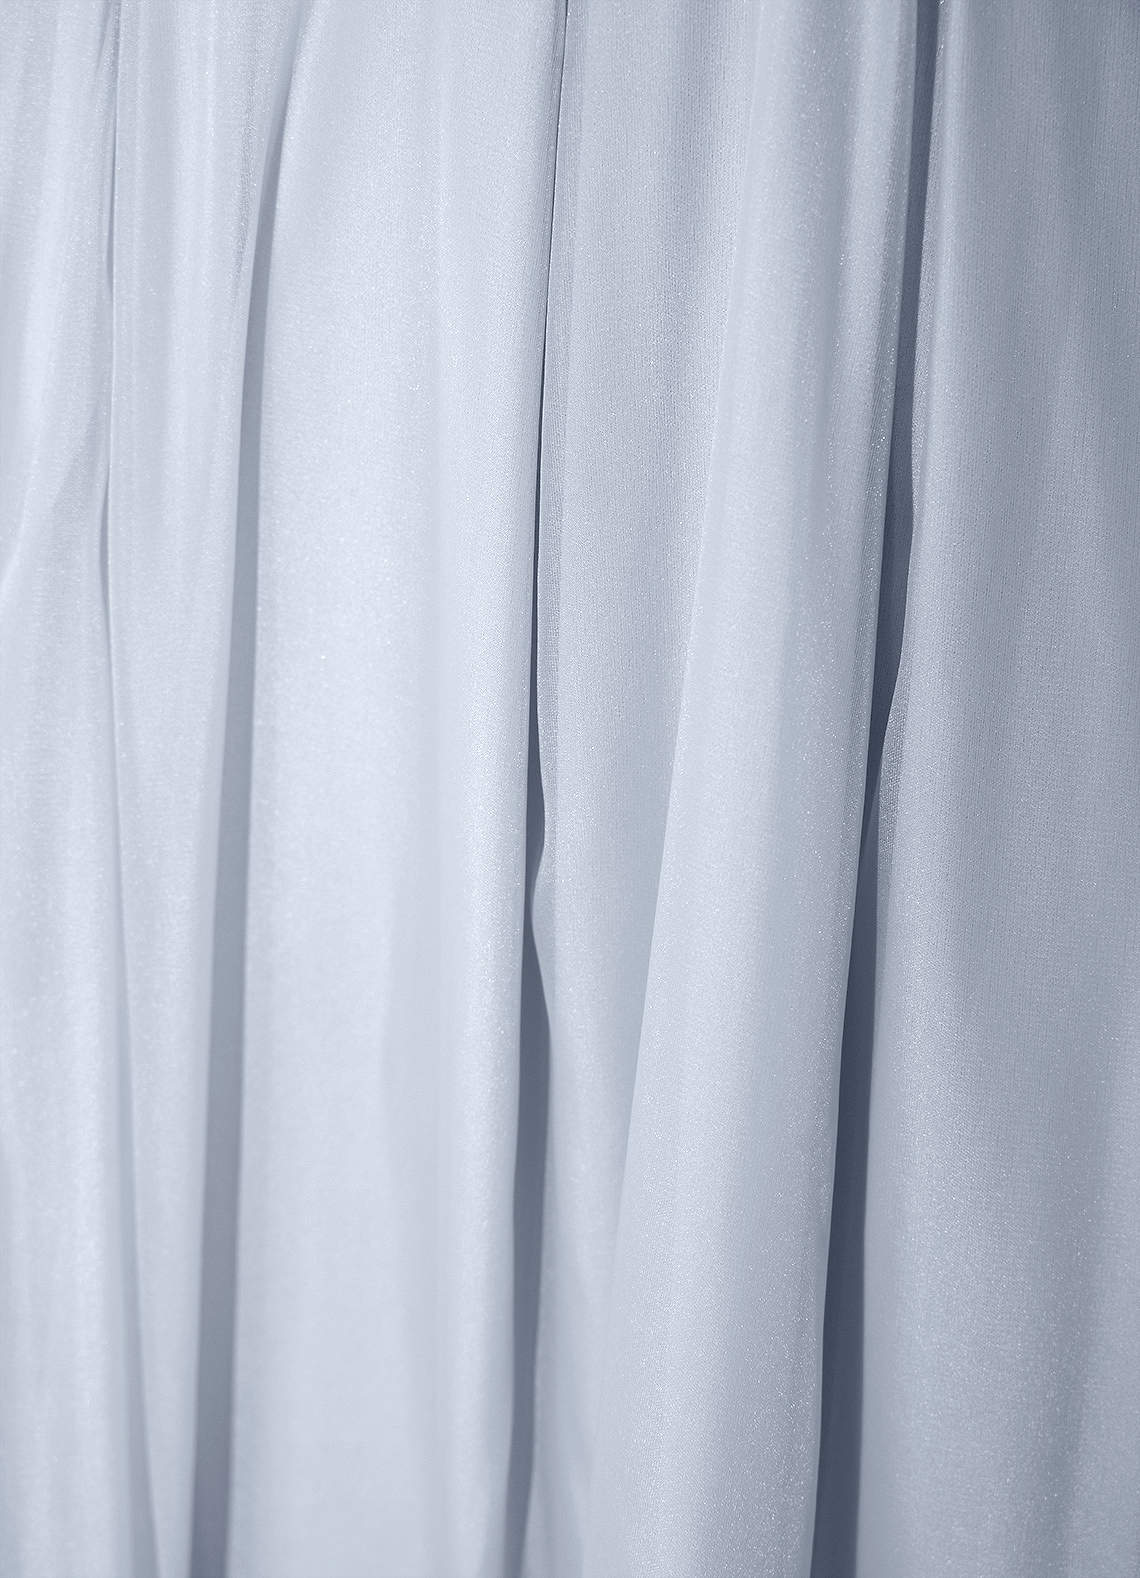 Dear To My Heart Light Blue Off-The-Shoulder Midi Dress image1